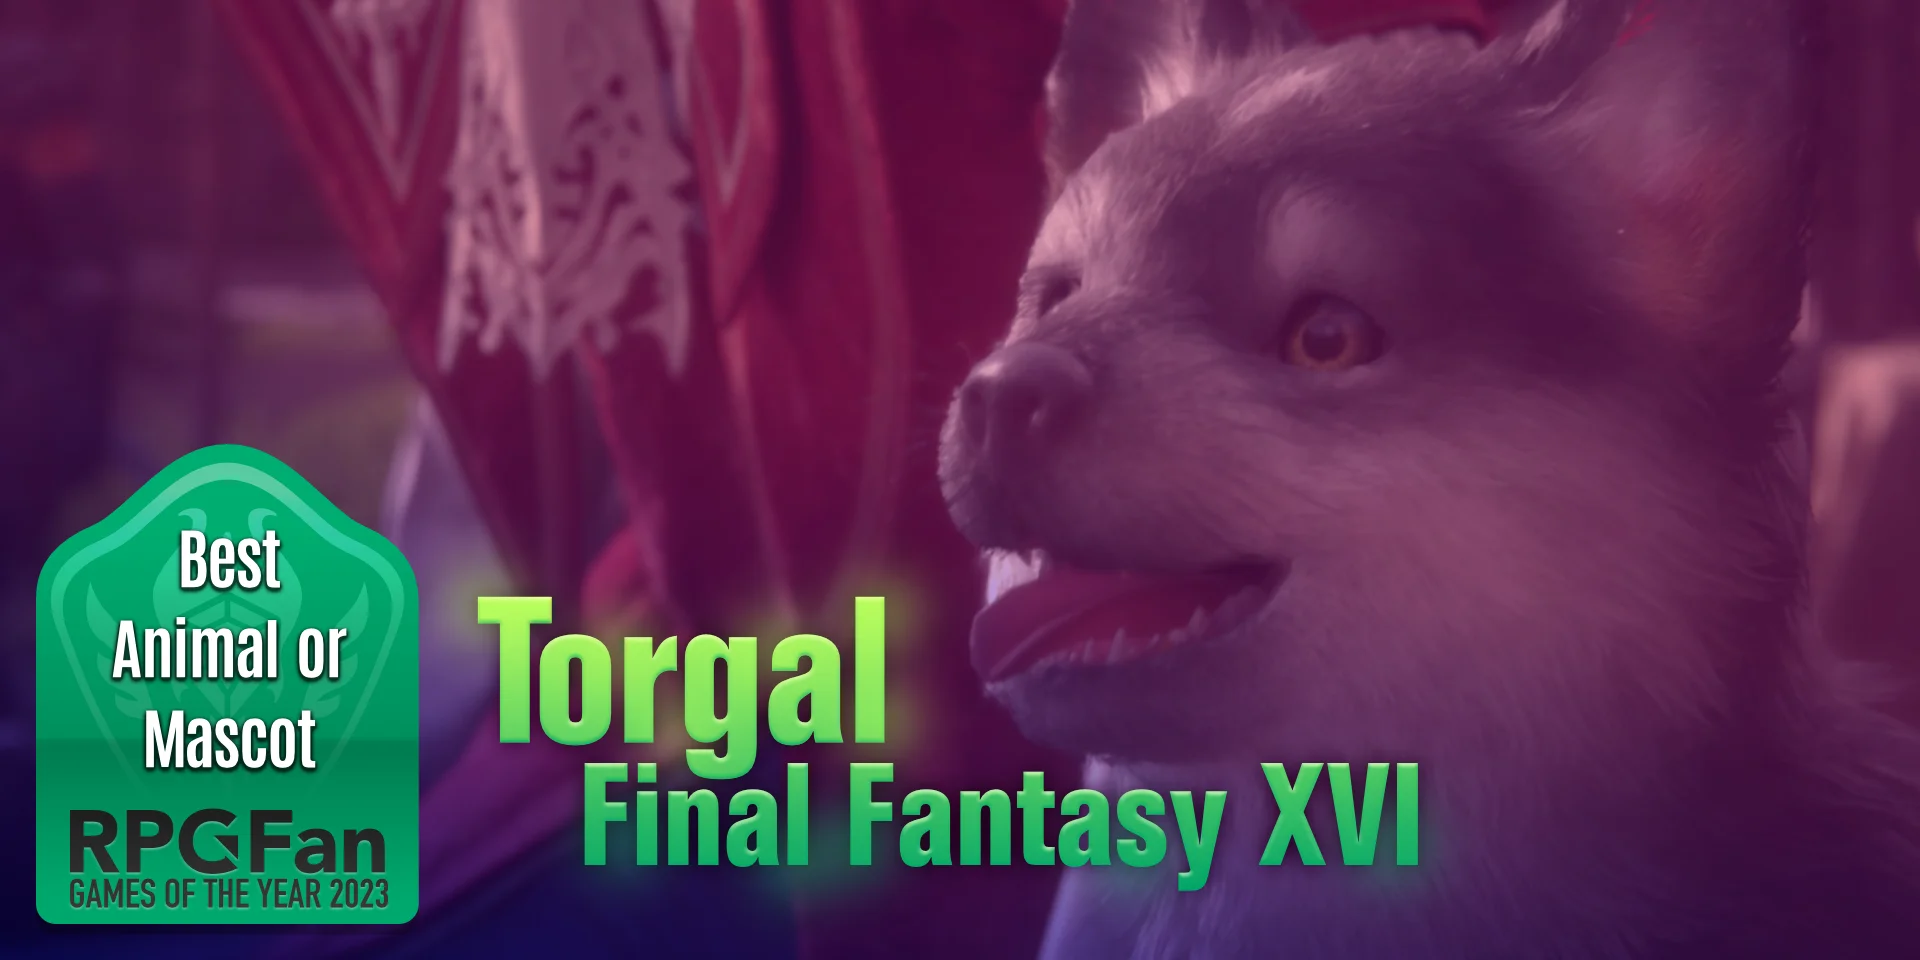 GOTY 2023 Best Animal or Mascot Torgal Final Fantasy XVI